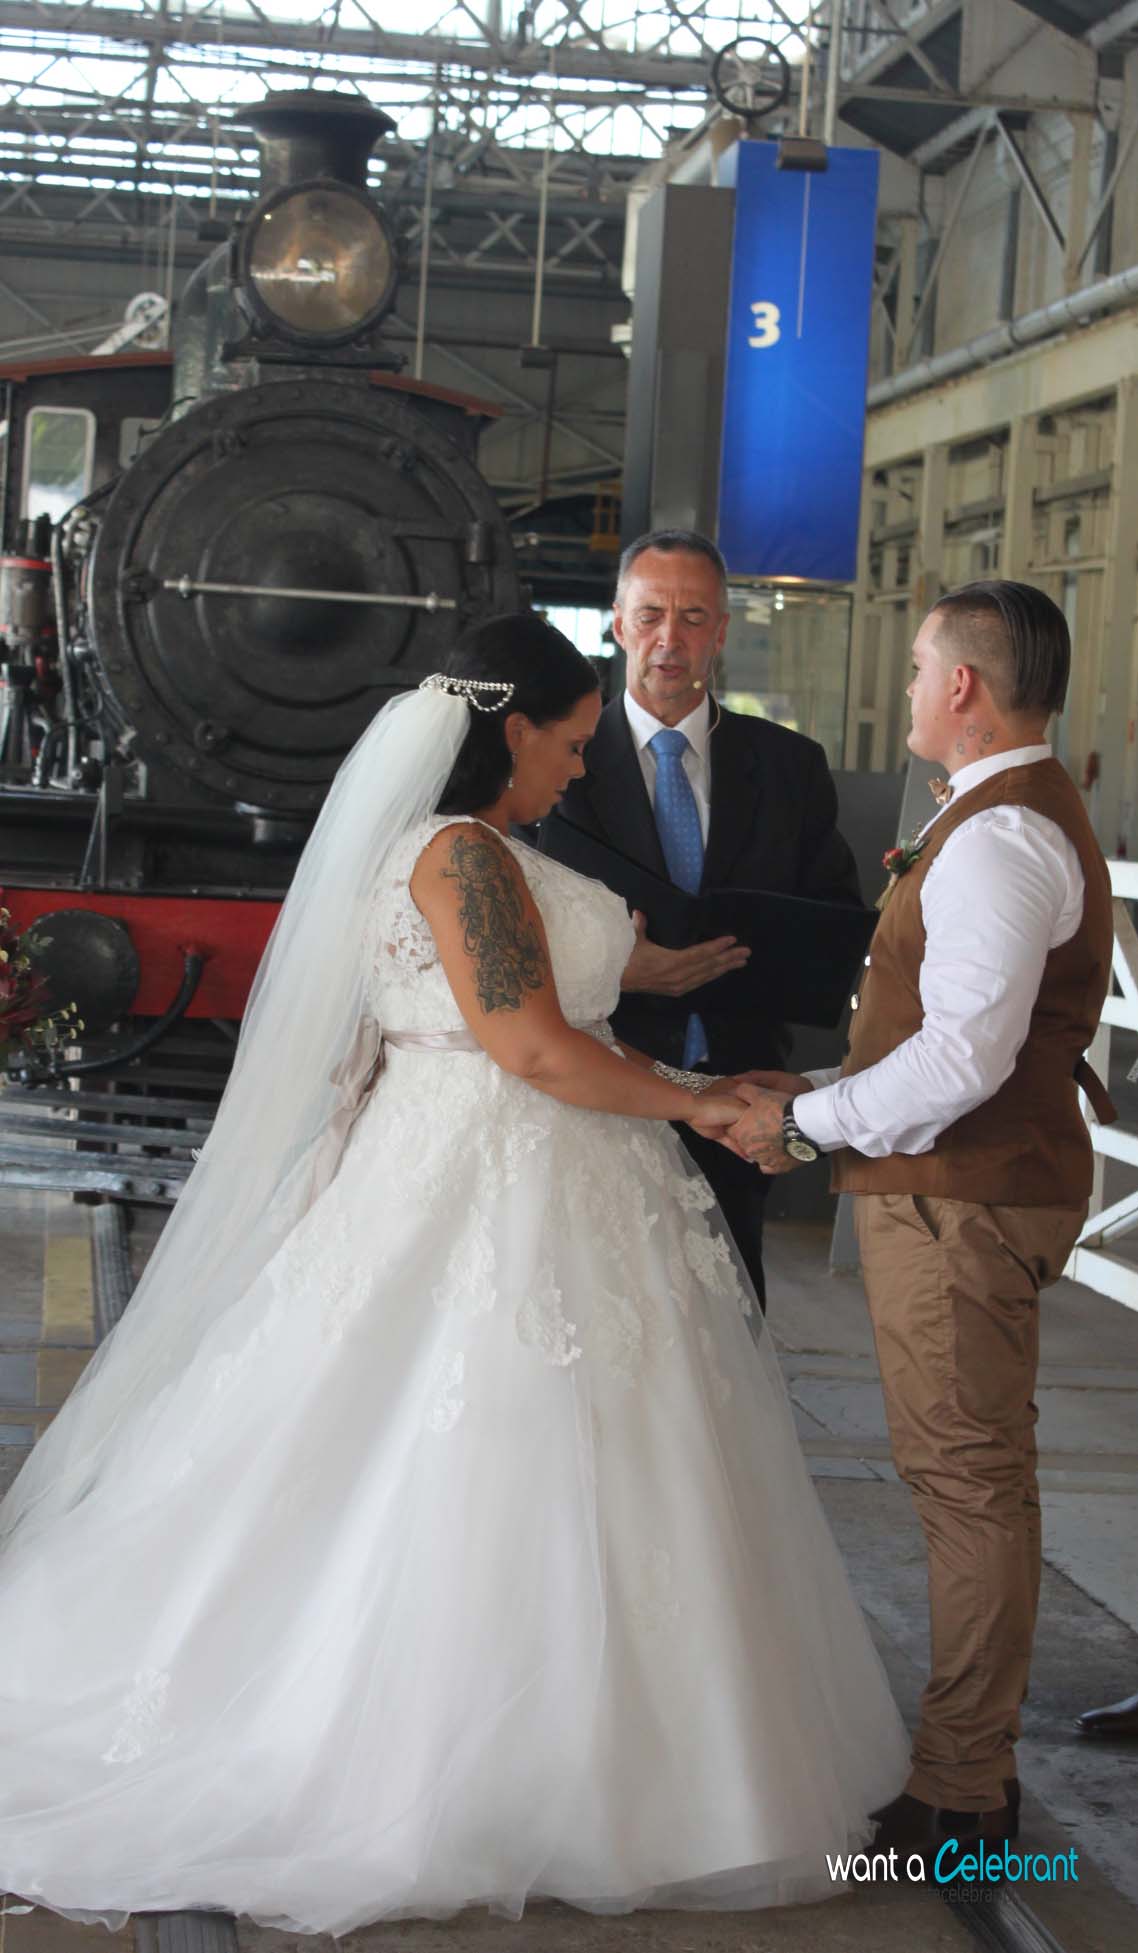 wedding with locomotive train